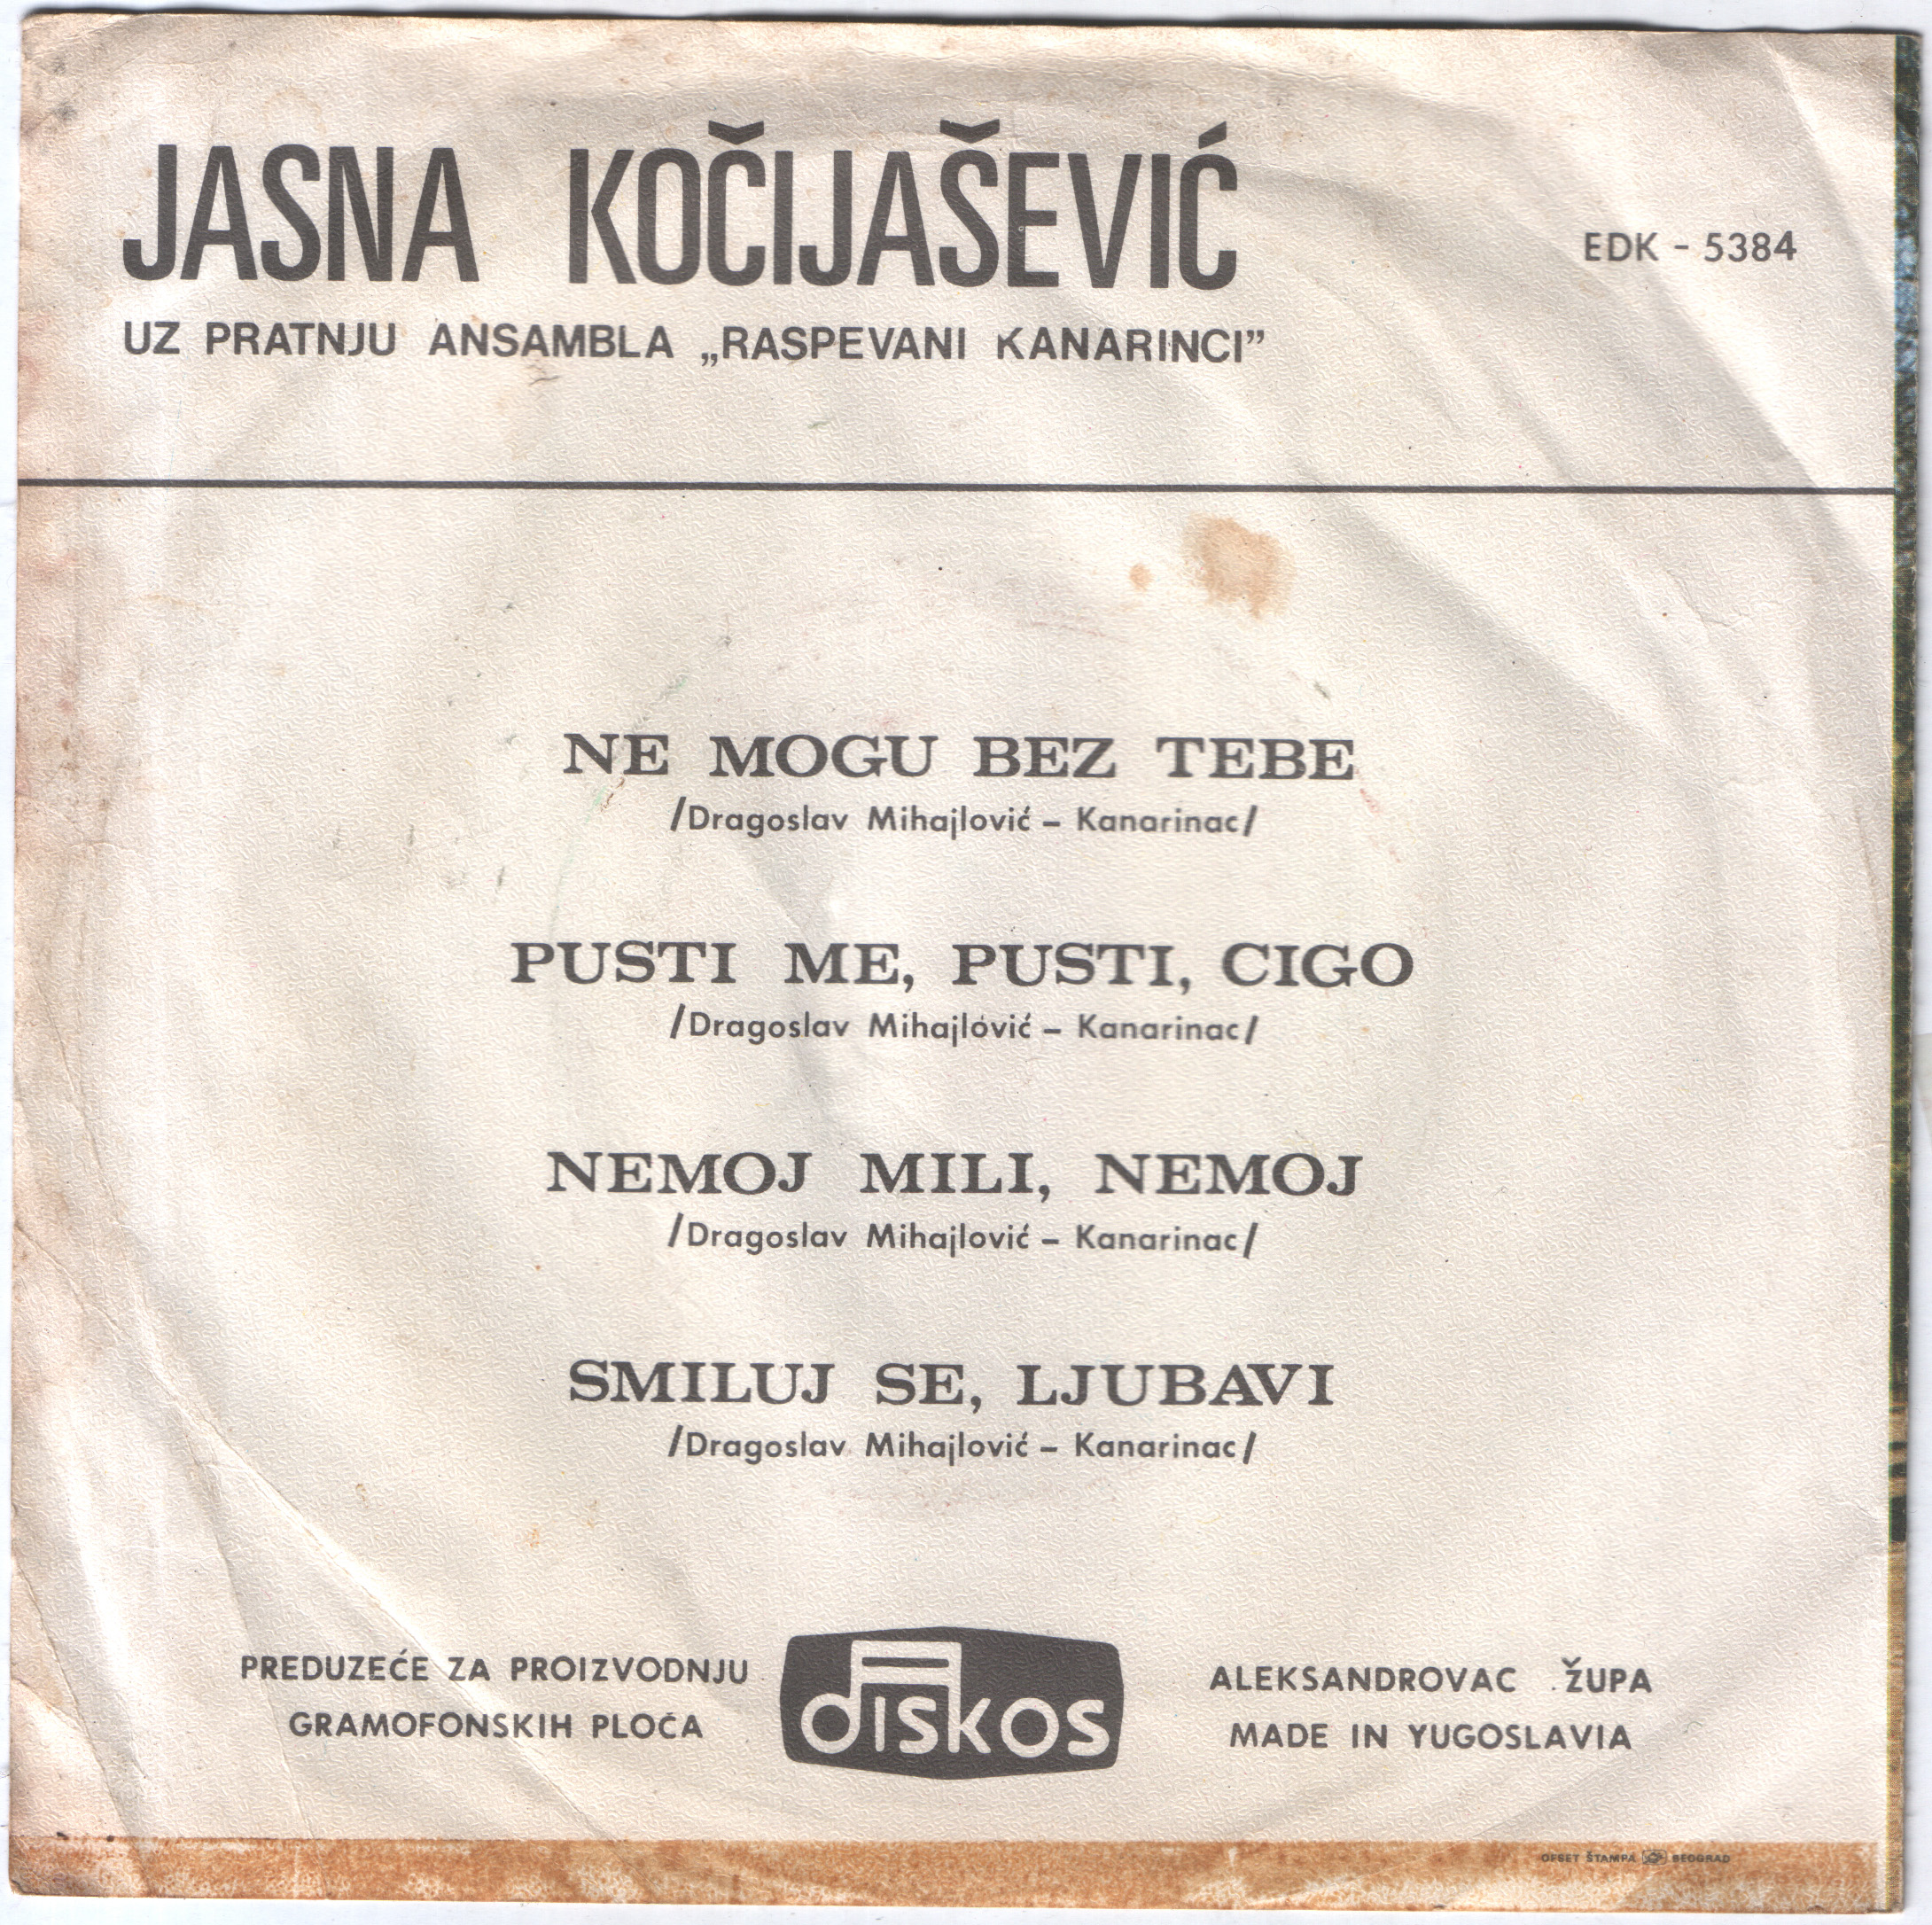 Jasna Kocijasevic 1971 Z